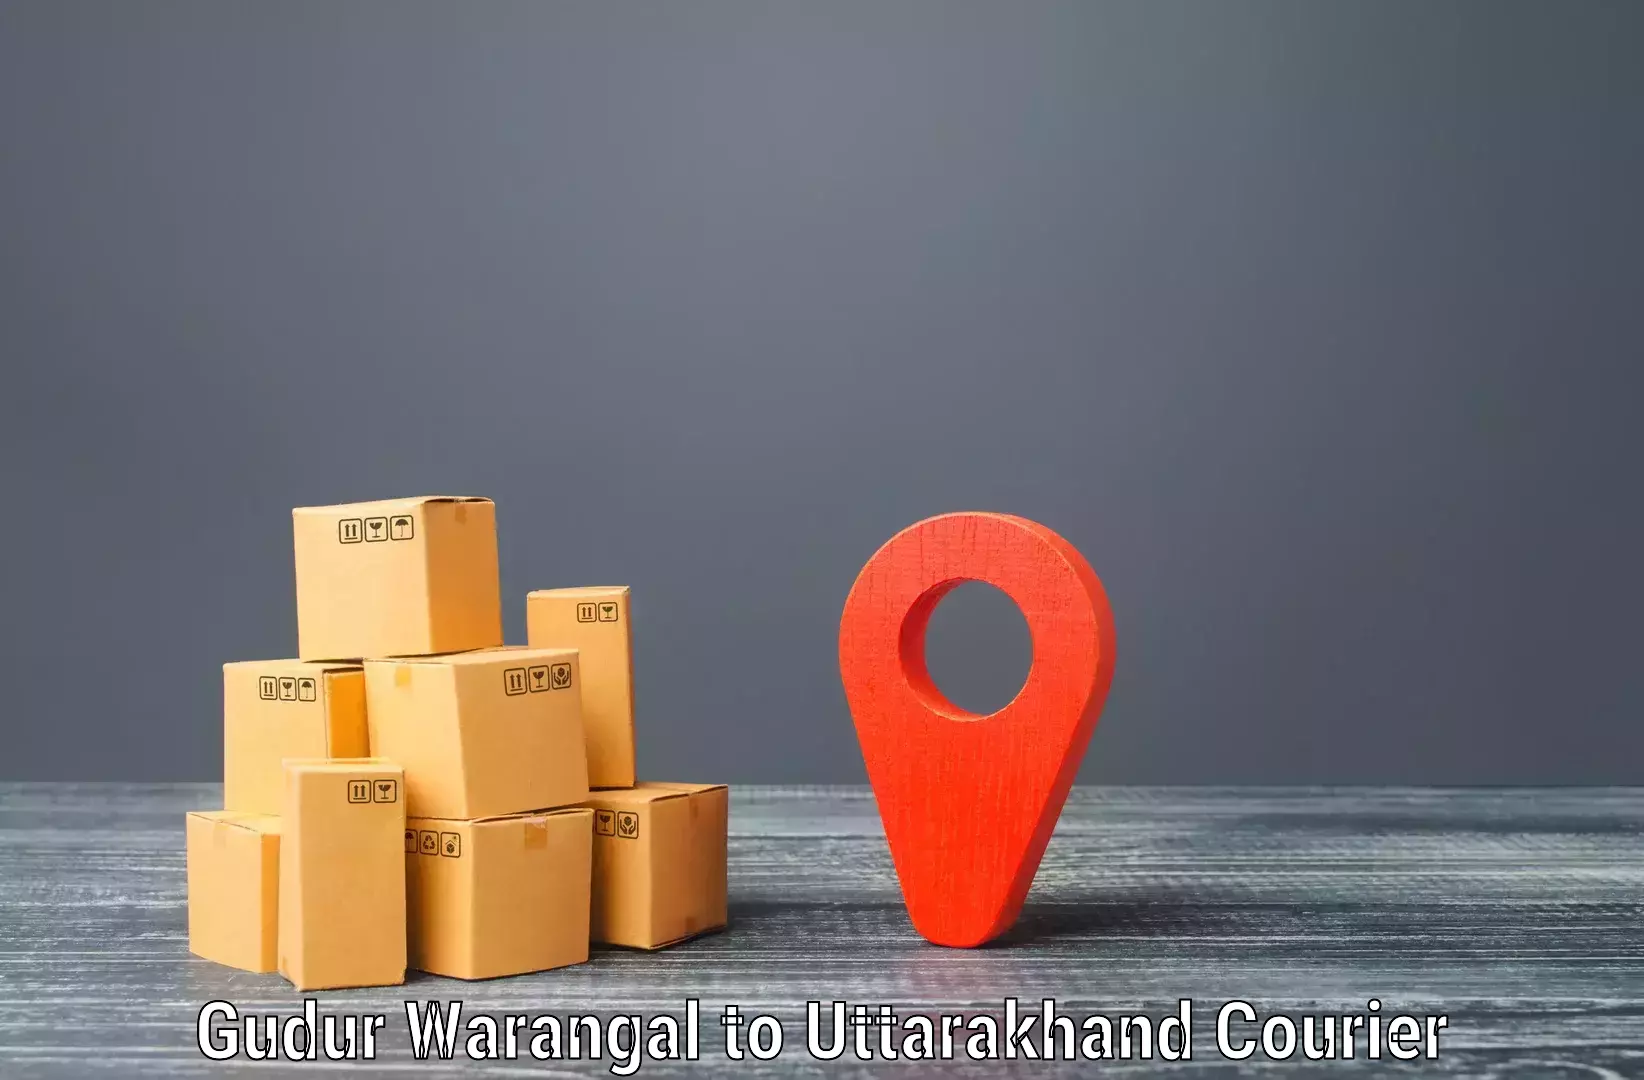 Courier service innovation Gudur Warangal to Dehradun